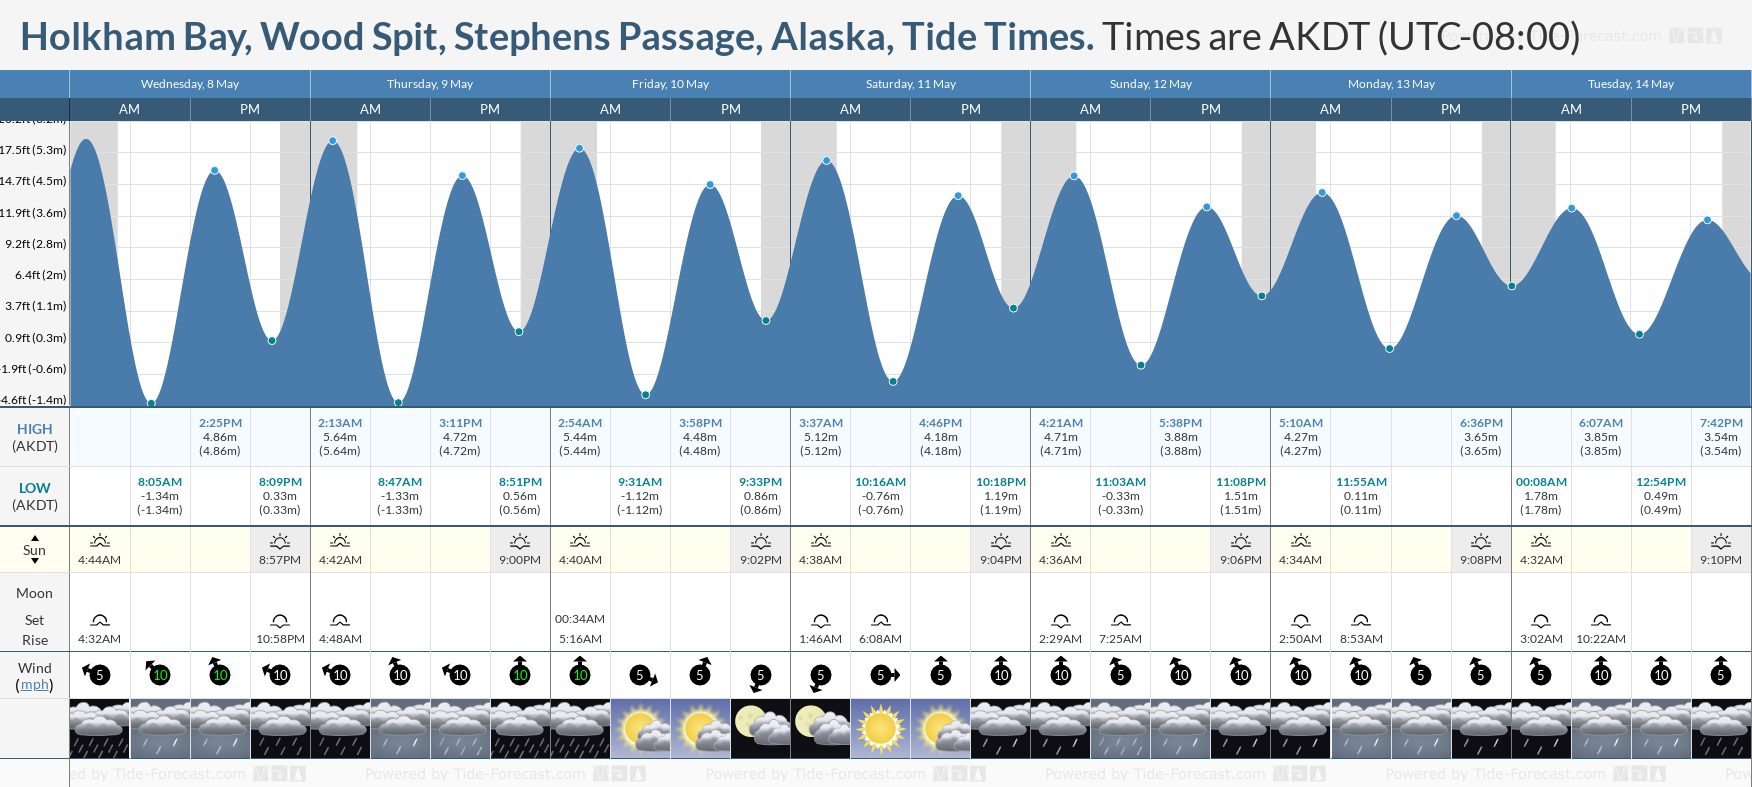 Holkham Bay, Wood Spit, Stephens Passage, Alaska Tide Chart including high and low tide tide times for the next 7 days